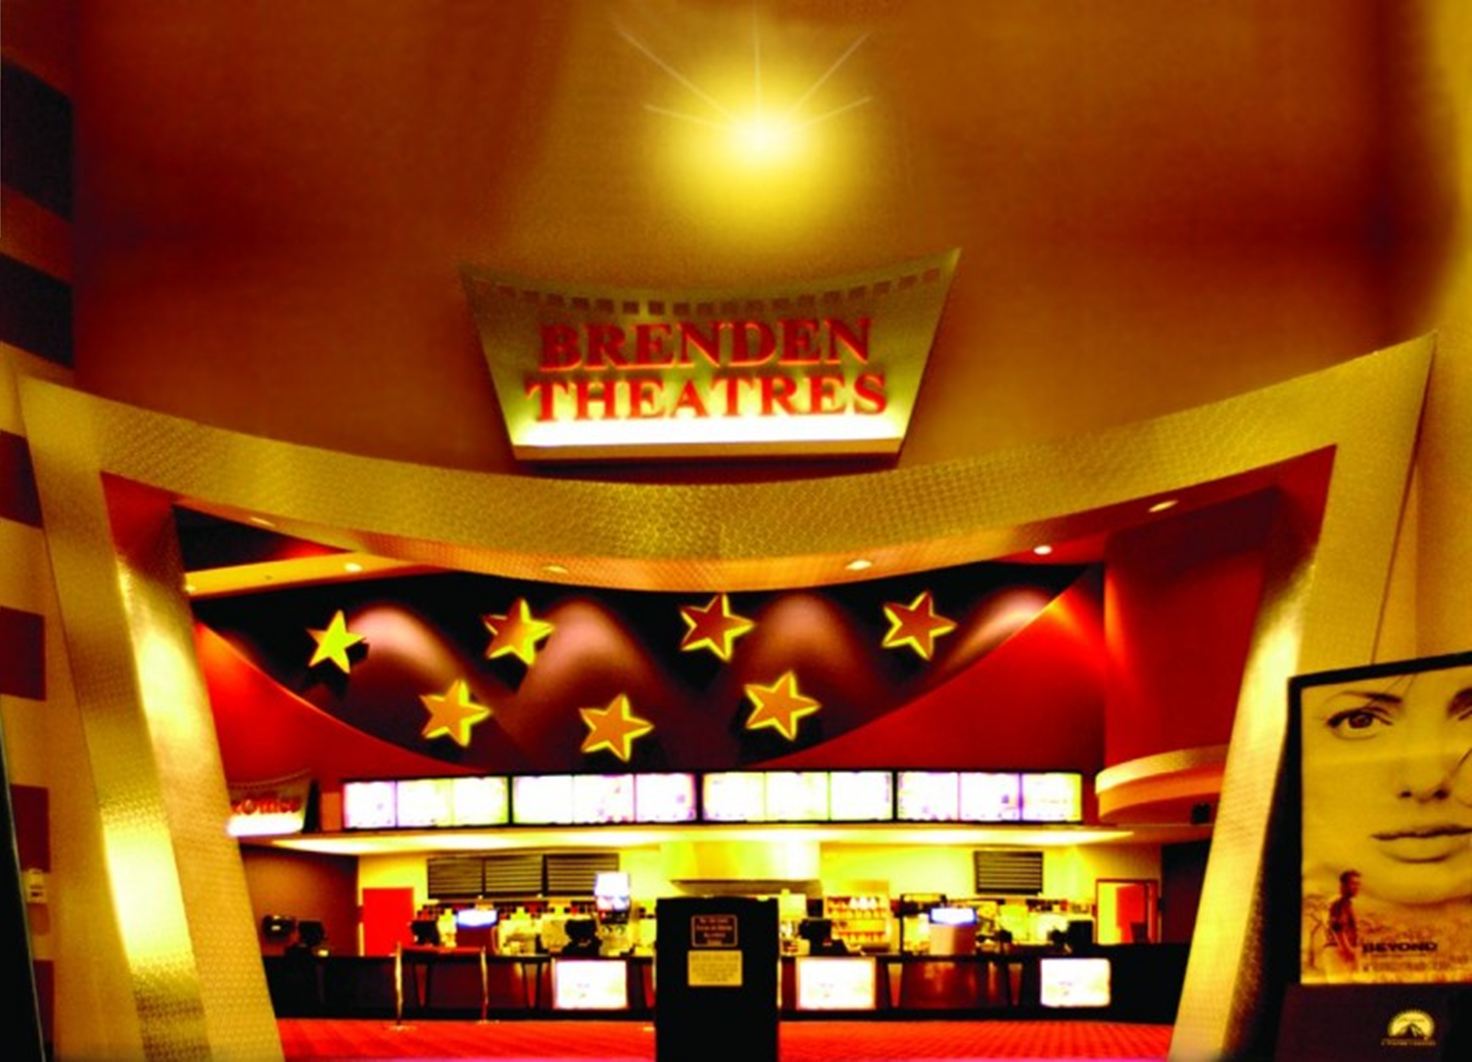 Theater Details Brenden Avi 8 Brenden Theatres